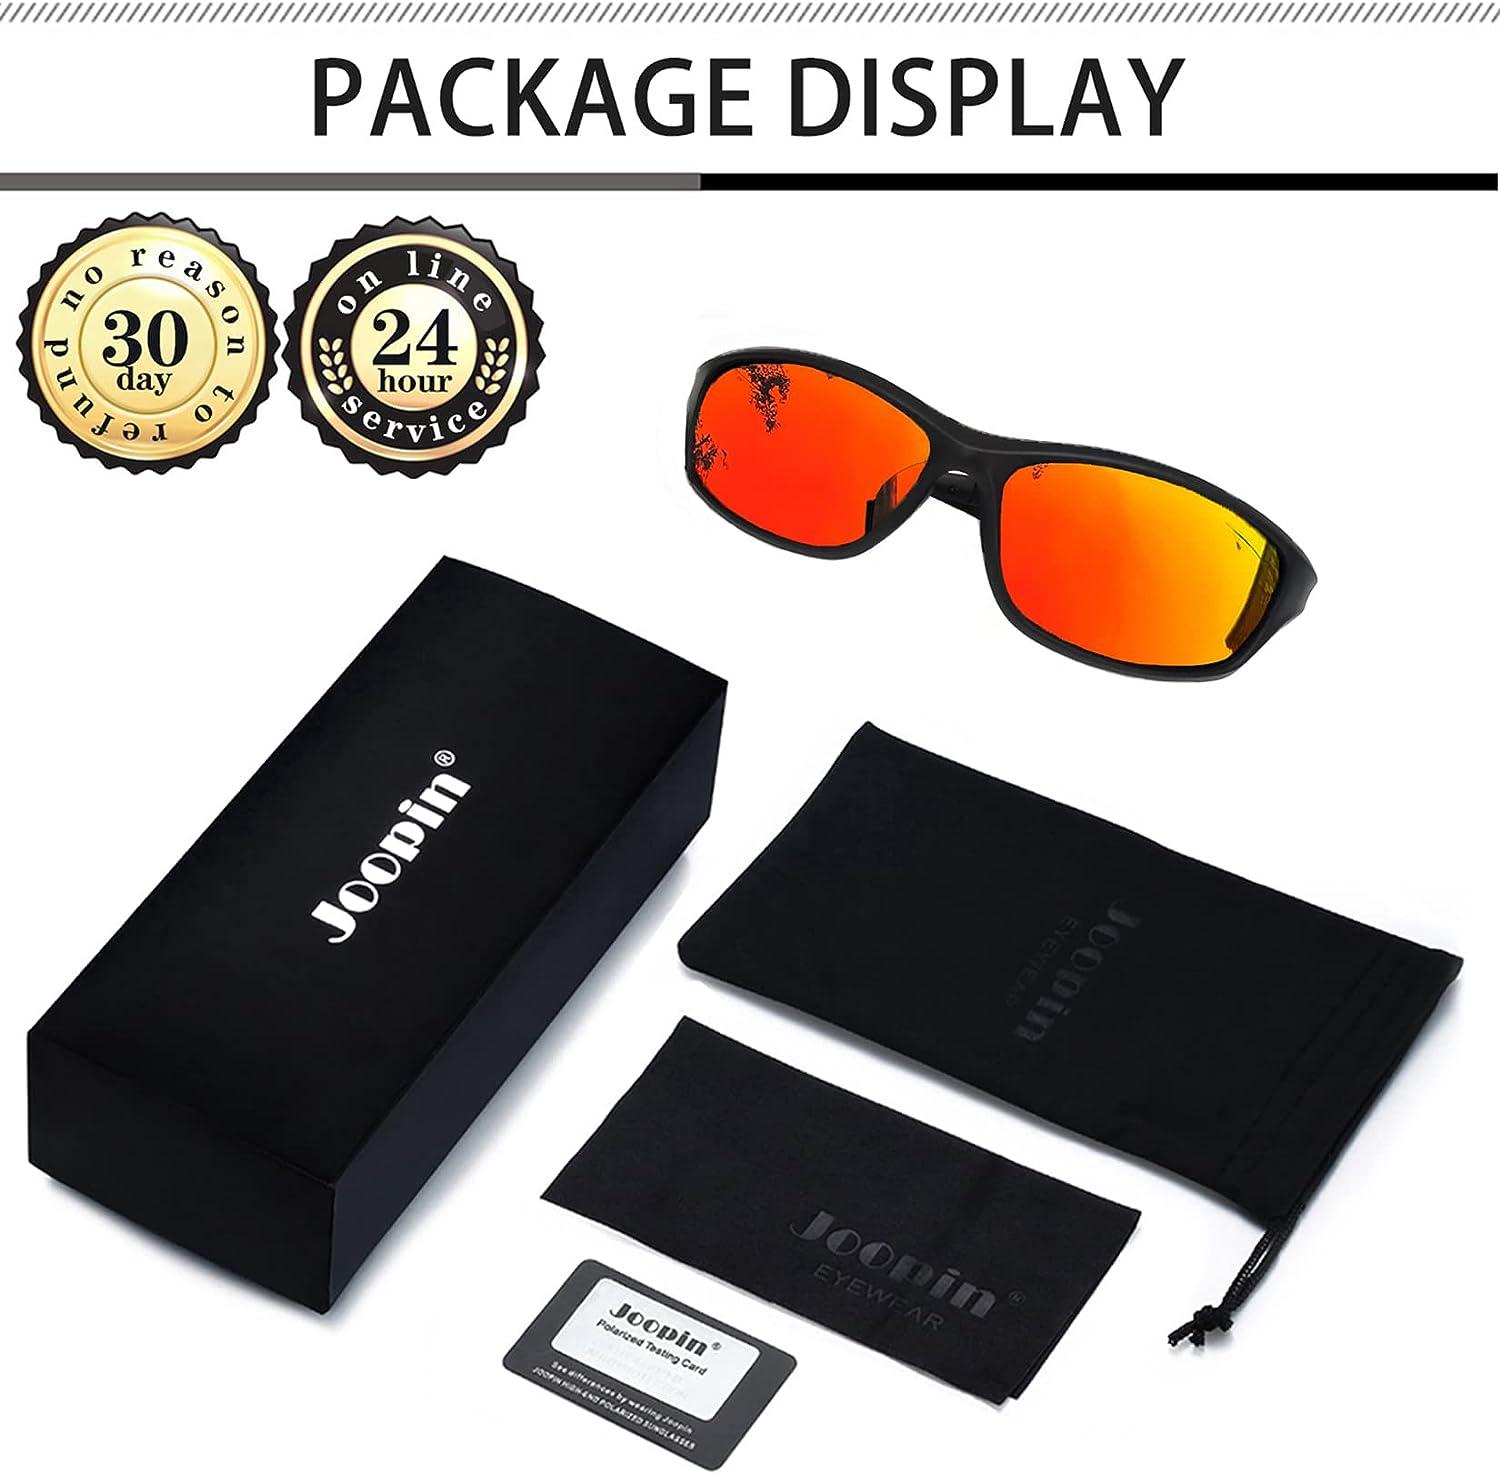 Joopin Sport Sunglasses Polarized UV Protection Wrap Around Sun